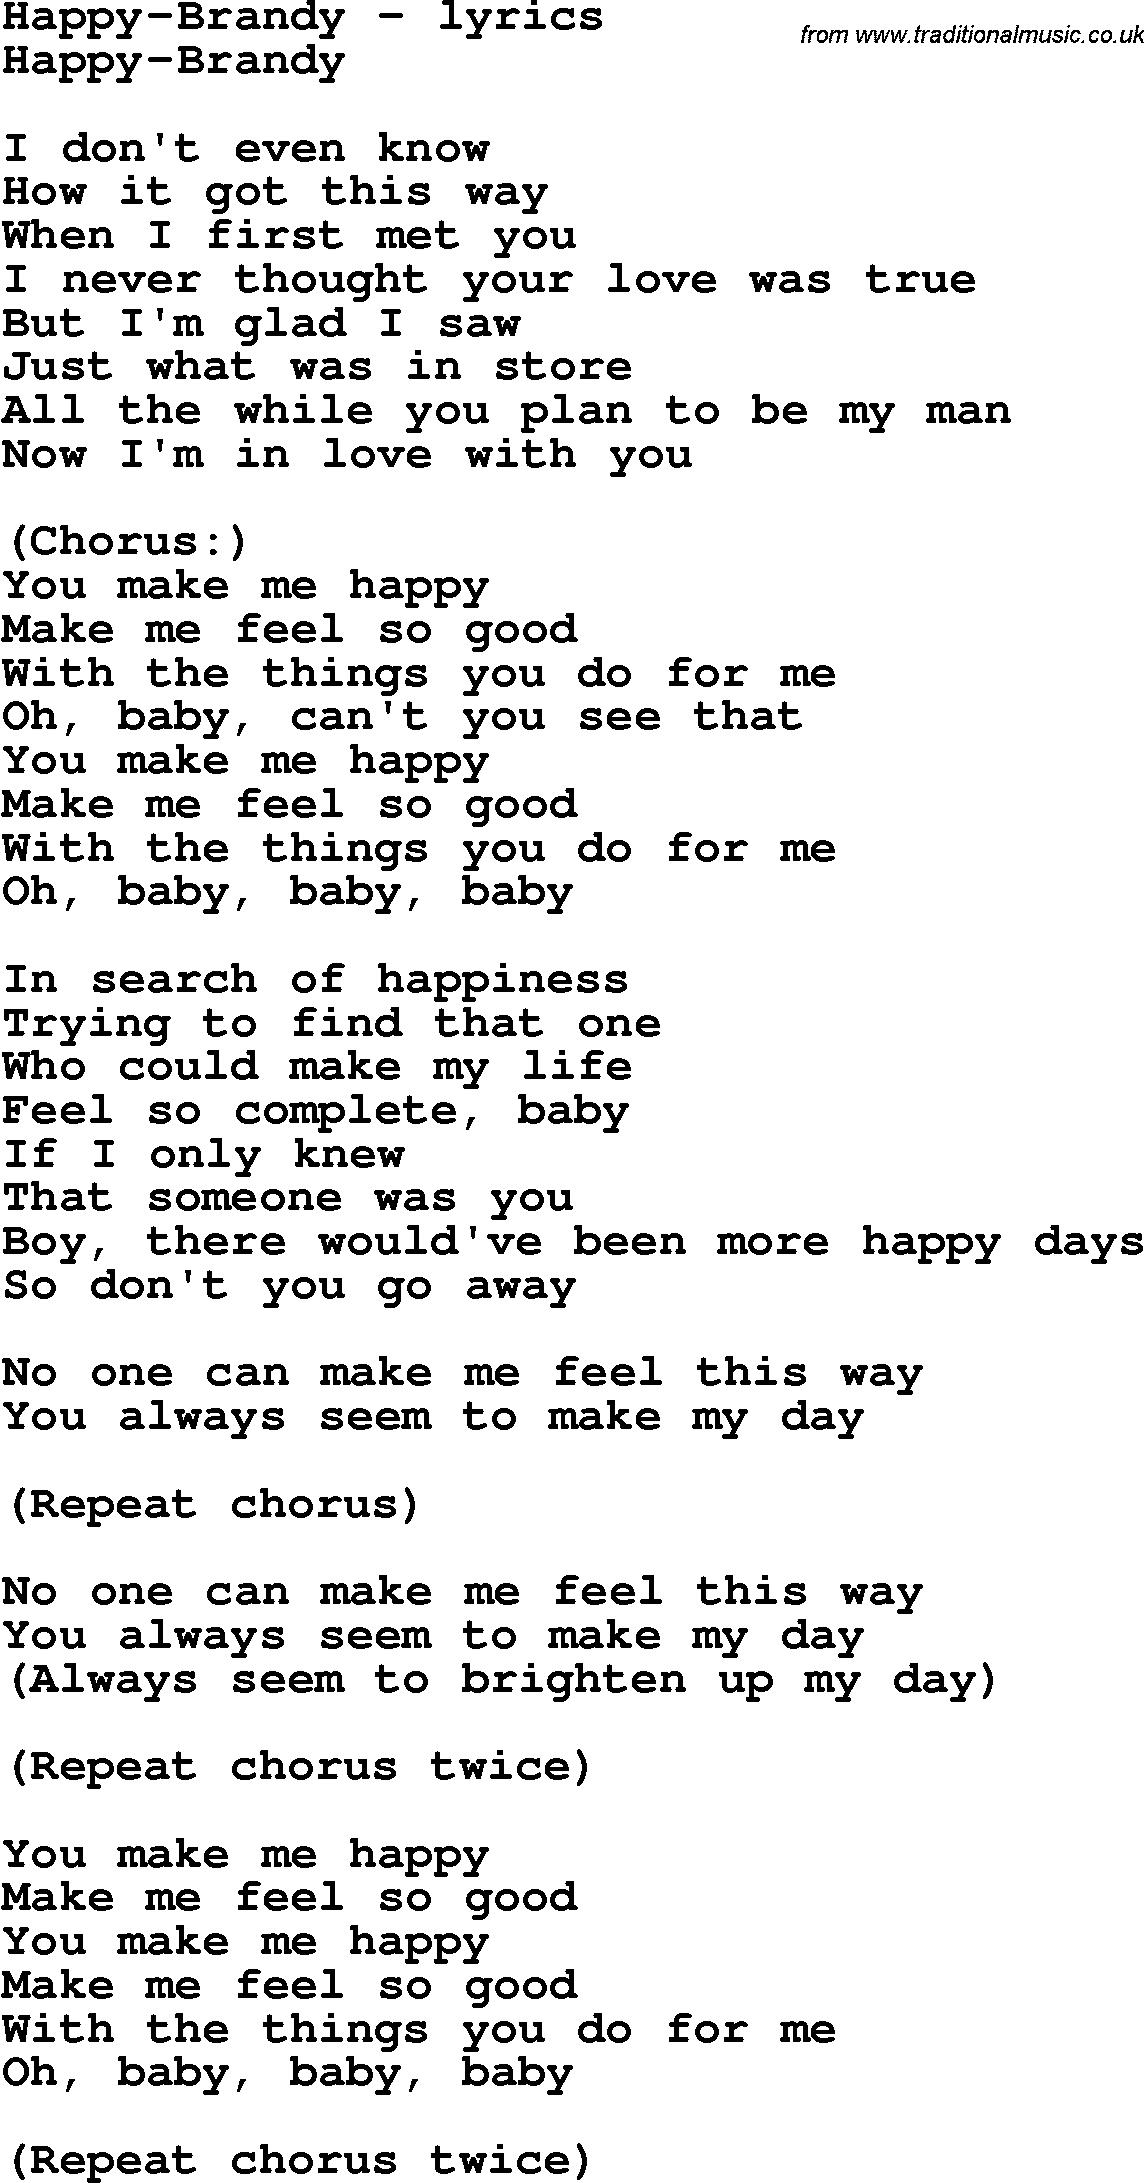 Love Song Lyrics for: Happy-Brandy